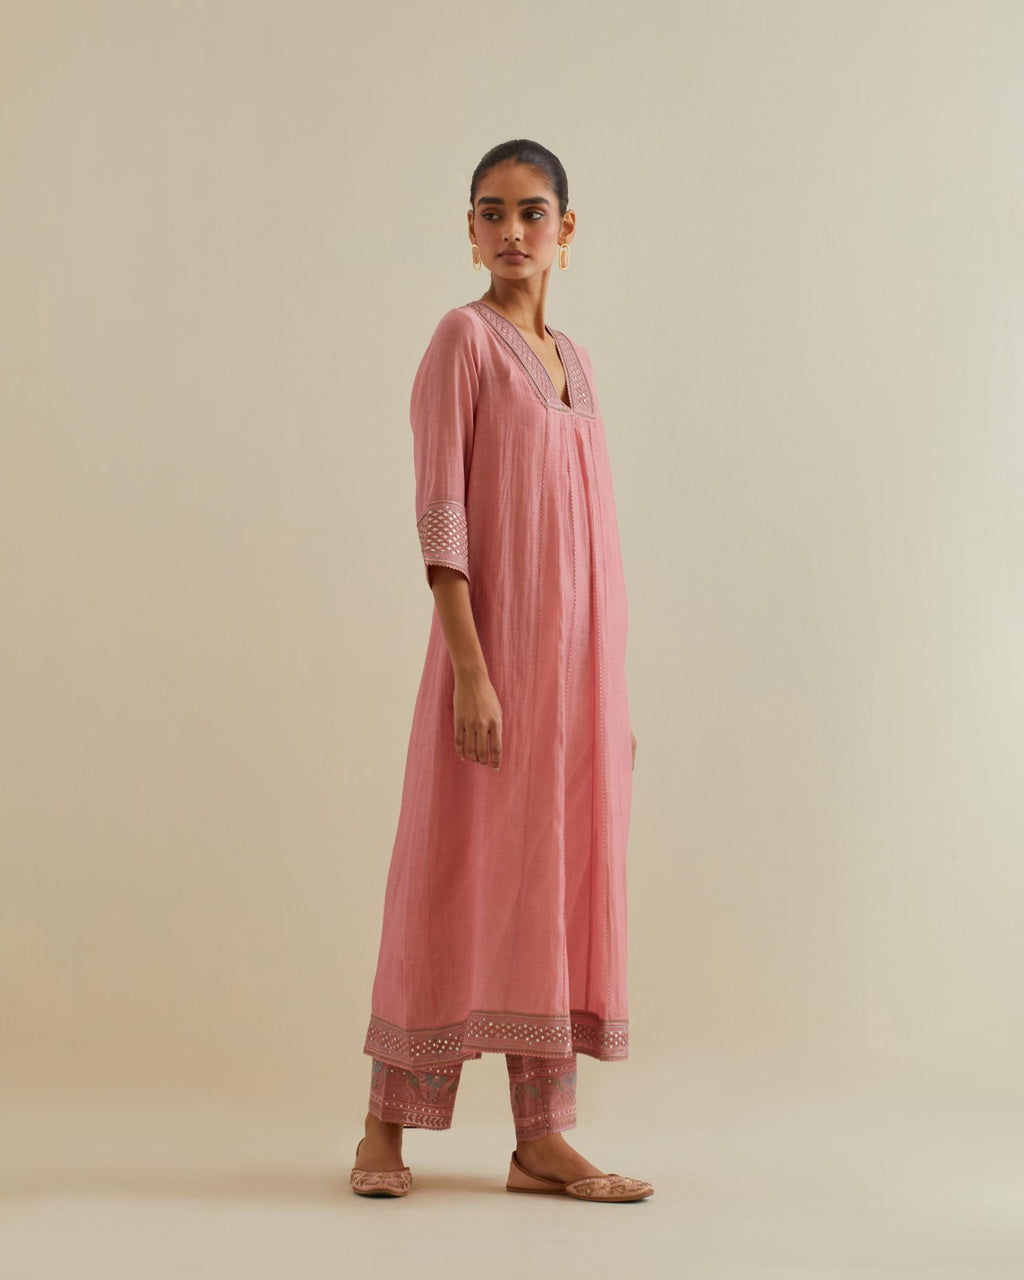 Pink cotton chanderi kurta dress set with a V neck embroidered yoke and panels.